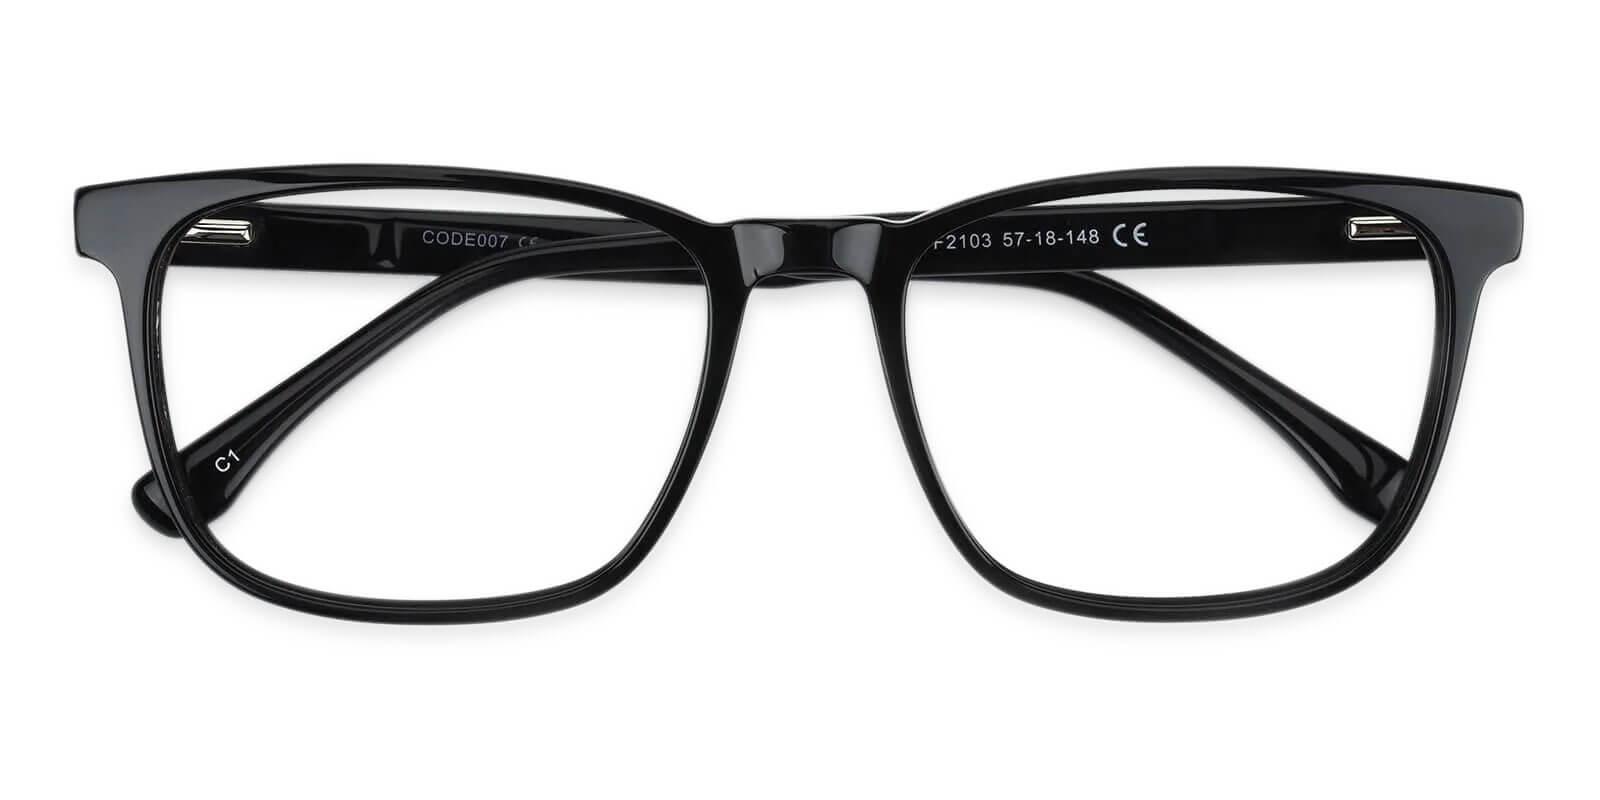 Kinjin Black Acetate Eyeglasses , SpringHinges , UniversalBridgeFit Frames from ABBE Glasses